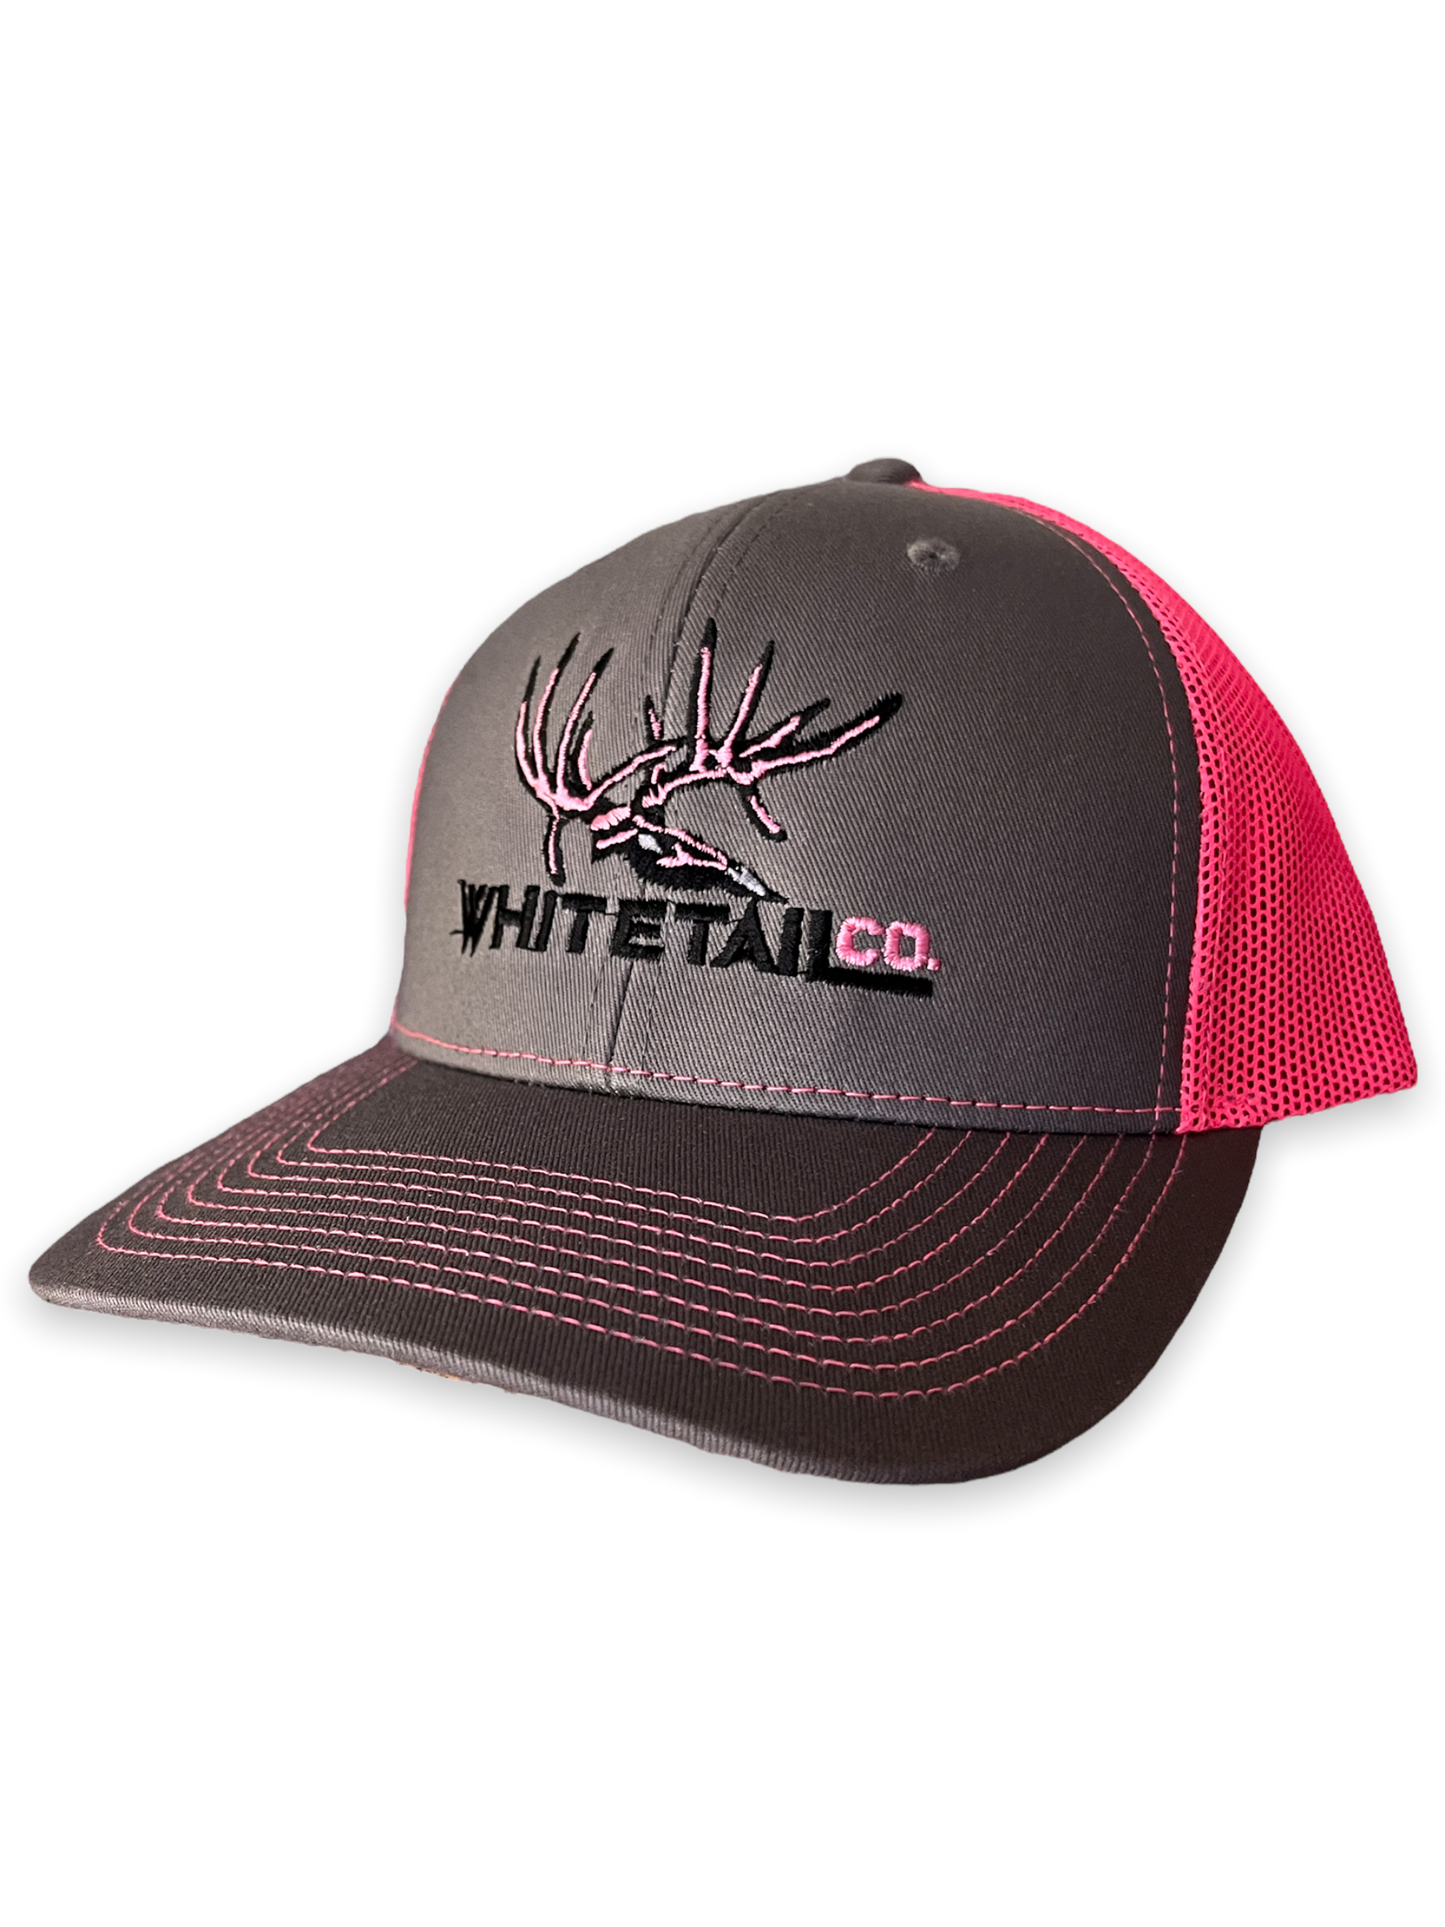 Whitetail Co. Ladies Trucker